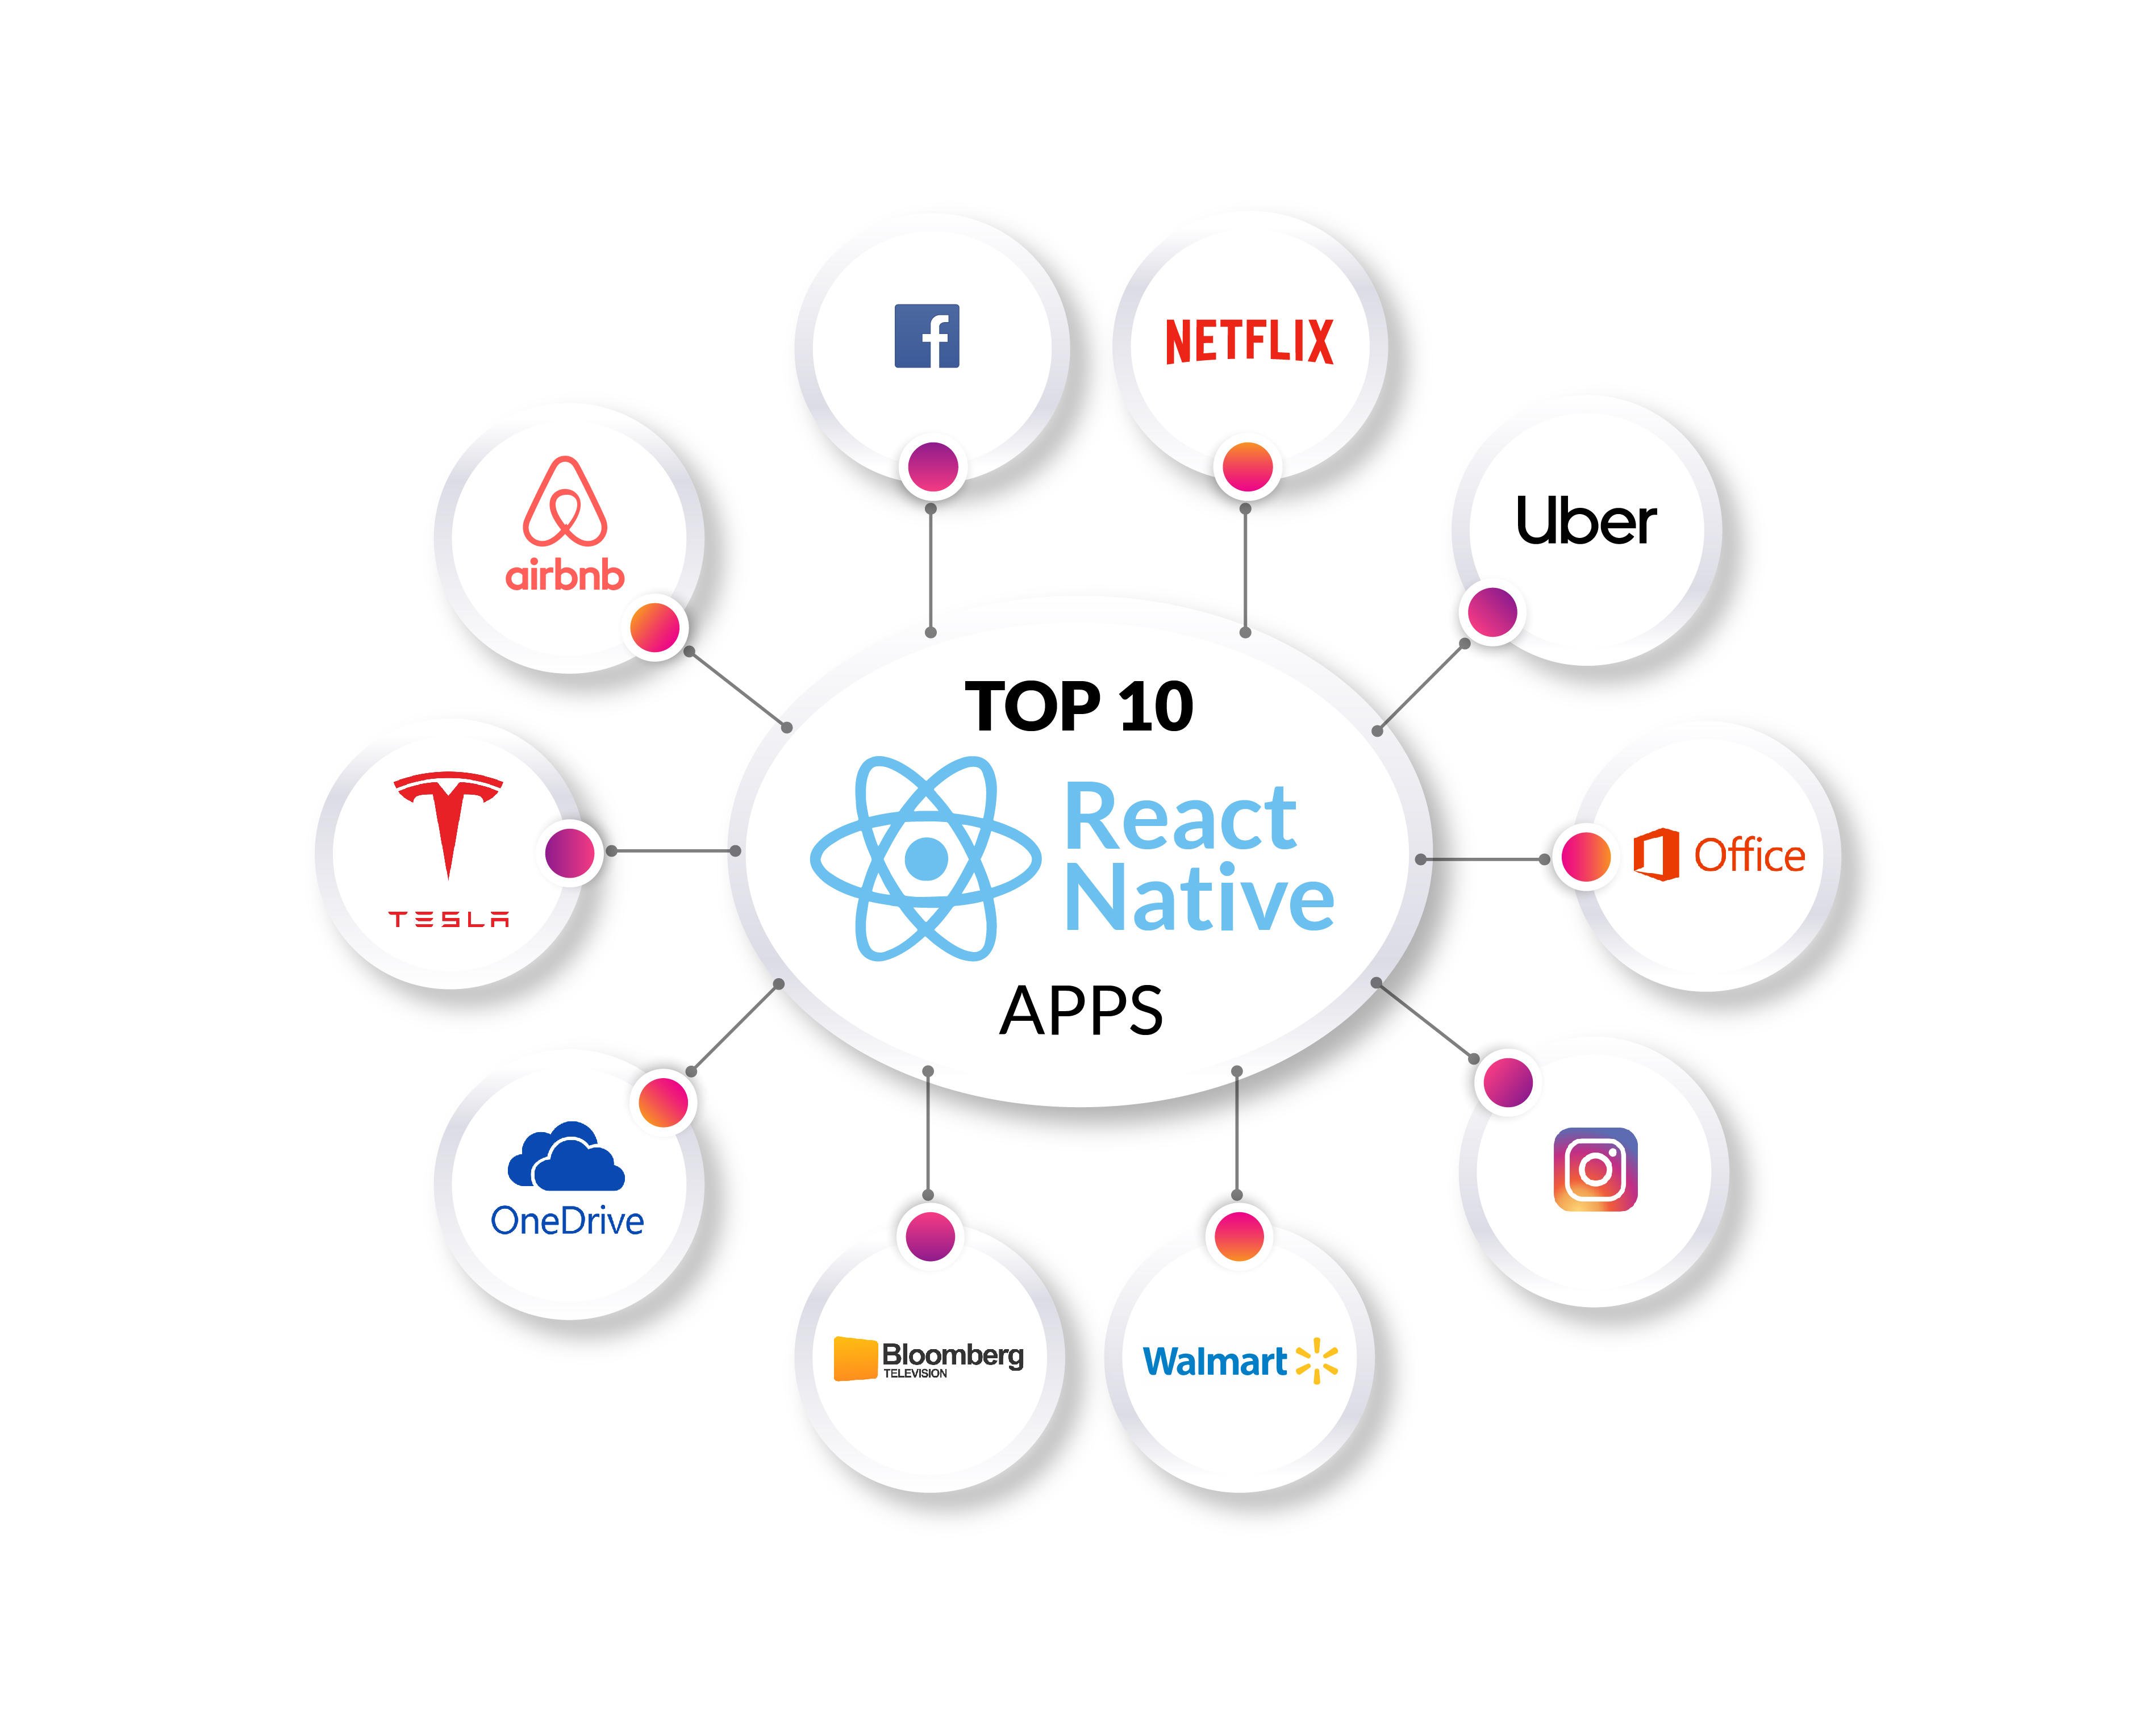 Top 10 React Native apps